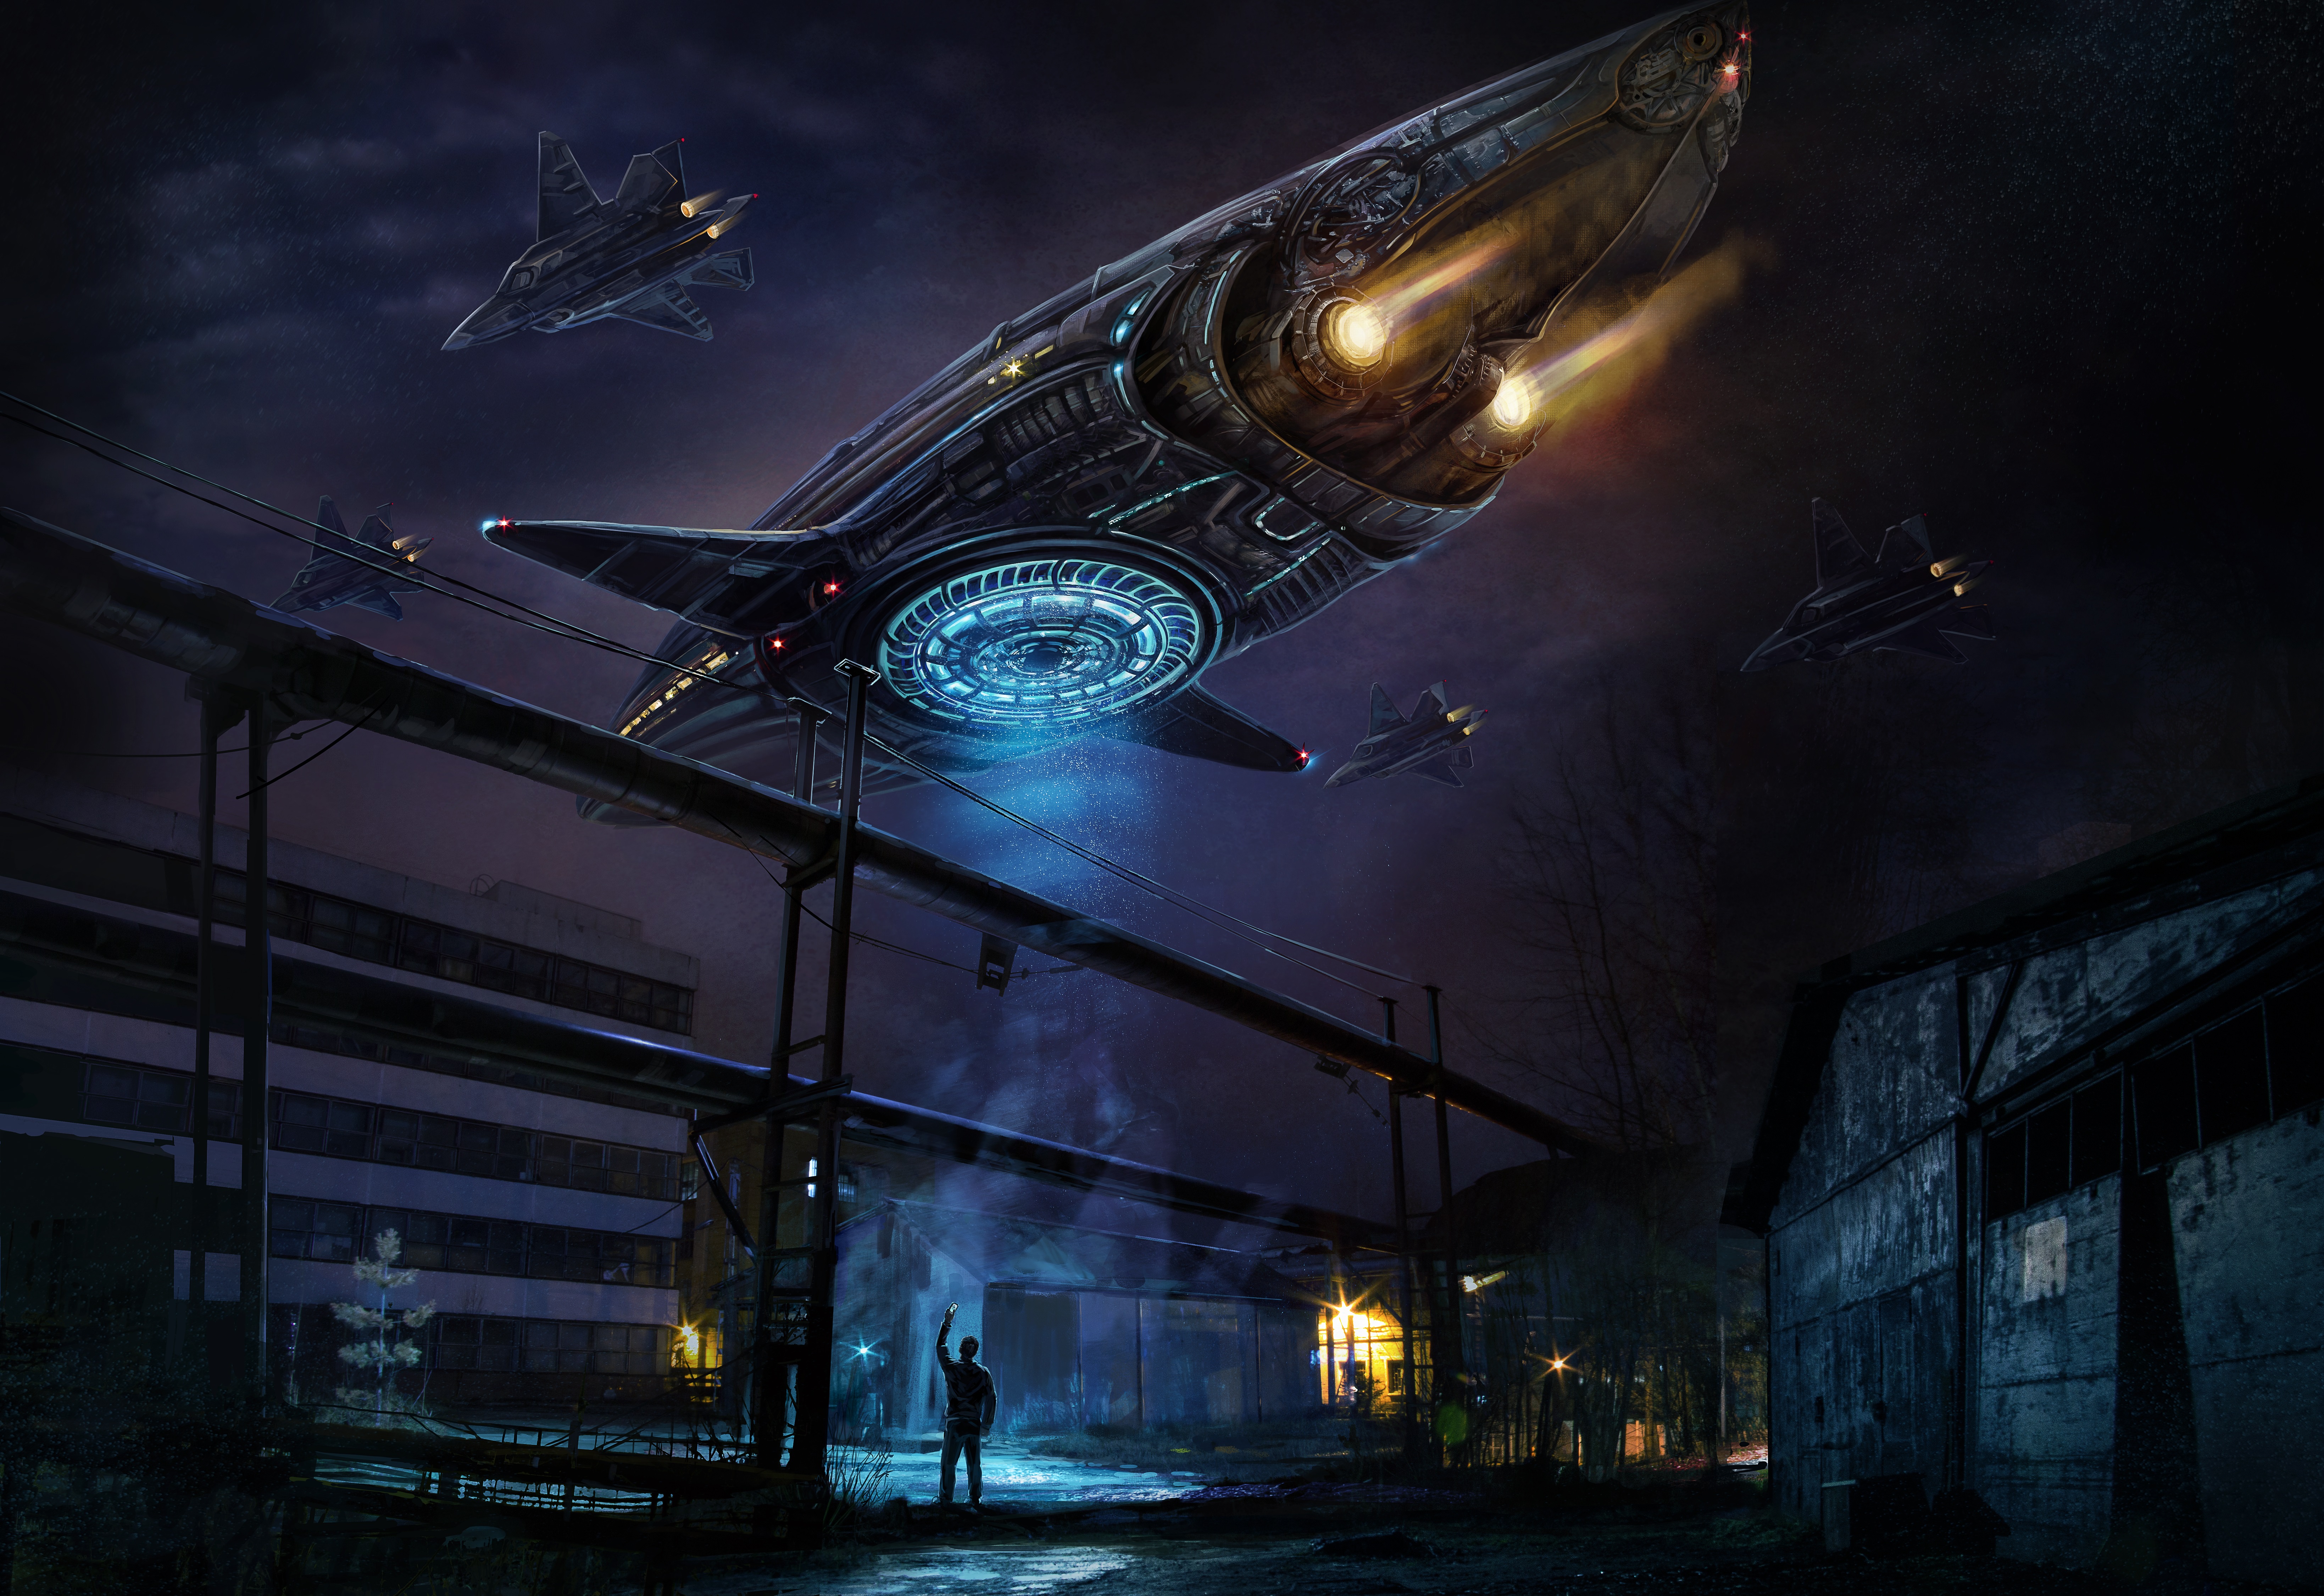 Spaceship Artwork Digital Art Science Fiction Night Futuristic Concept Art Glowing Lights Slum Flyin 6554x4500